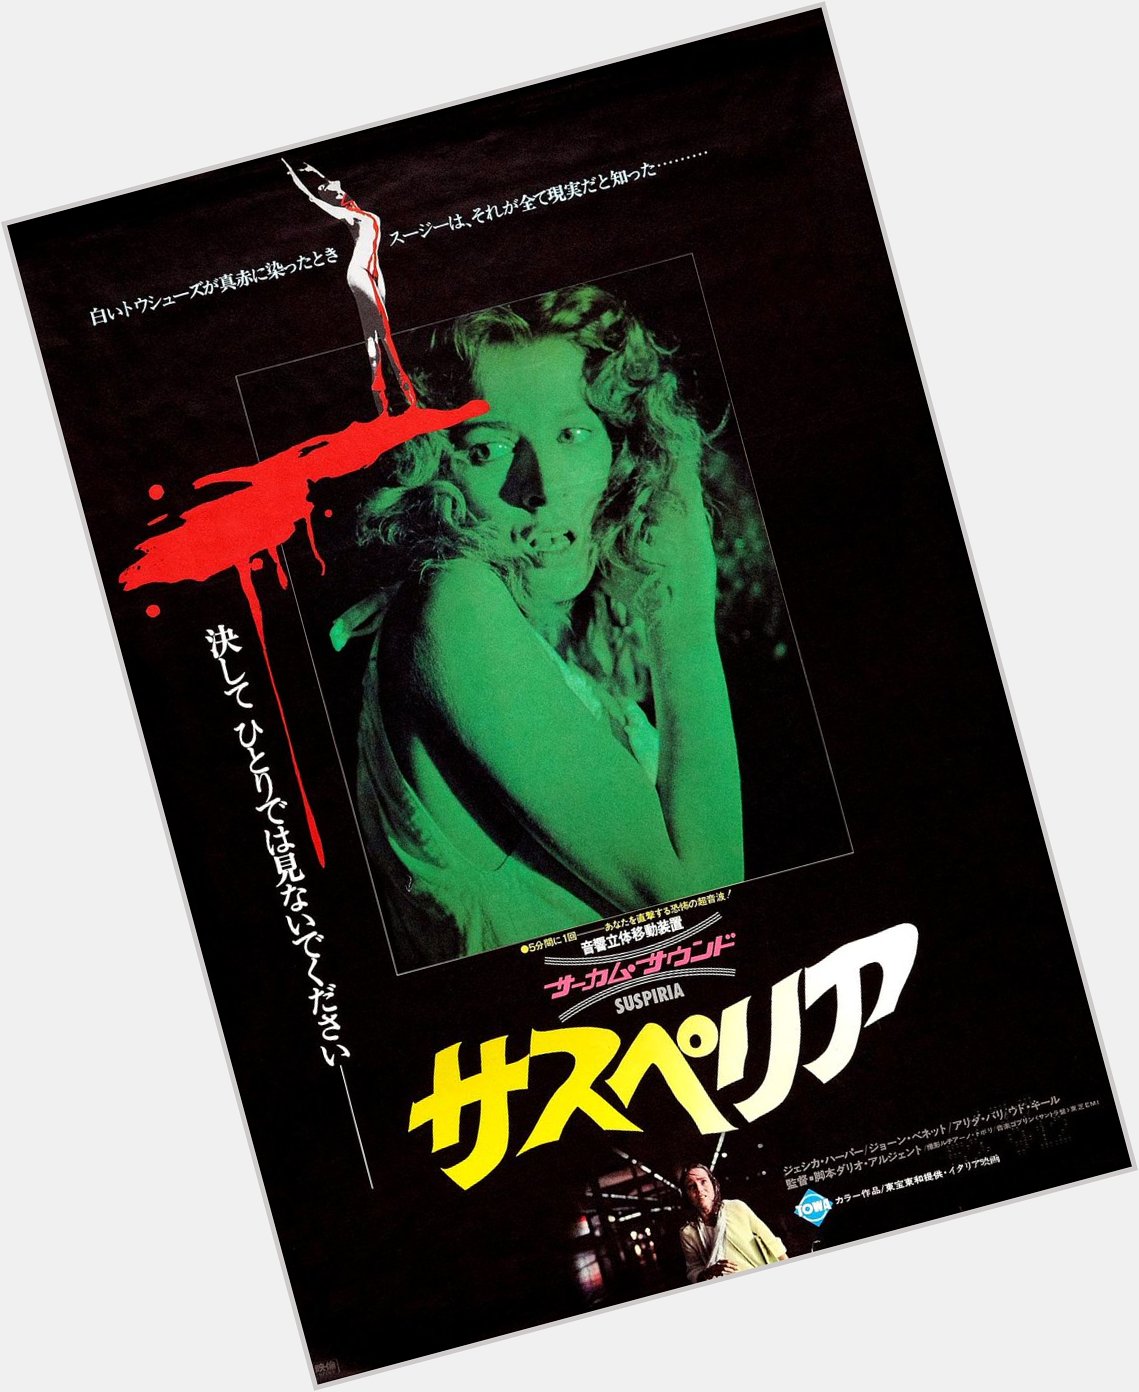 Happy birthday to Dario Argento - SUSPIRIA - 1977 - Japanese release poster 